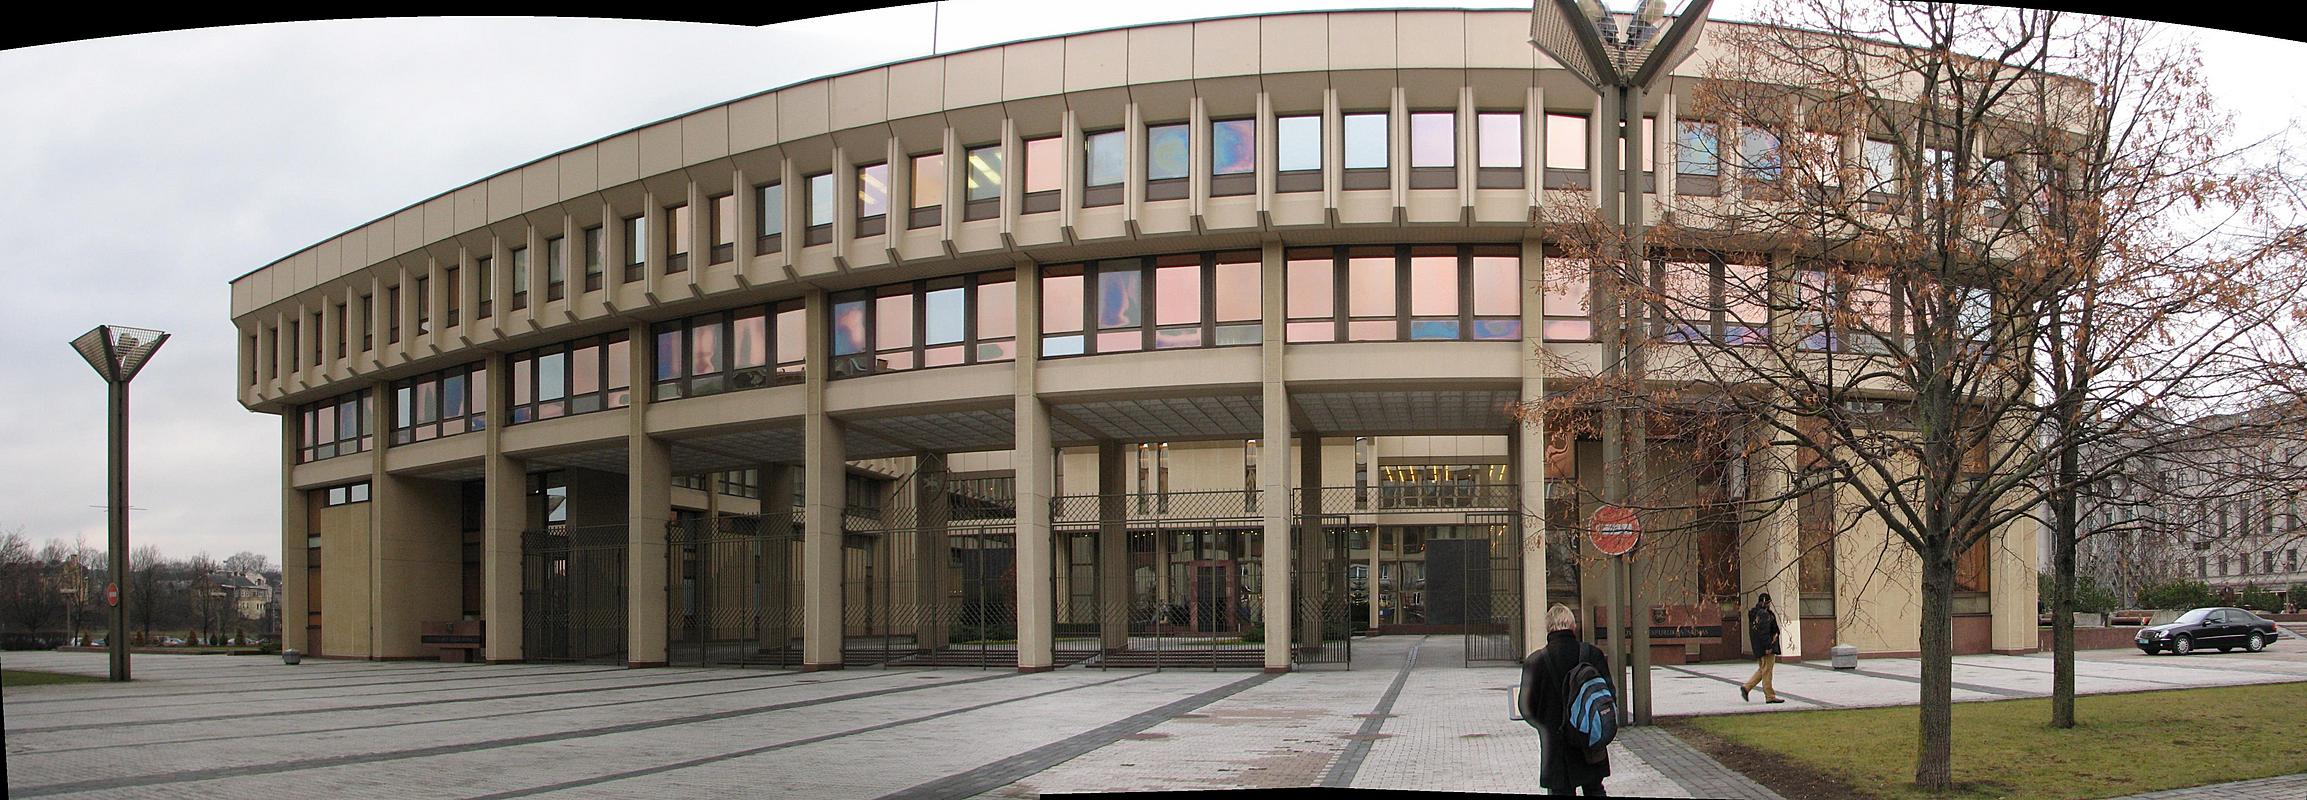 Seimas Palace - Lithuanian parliament